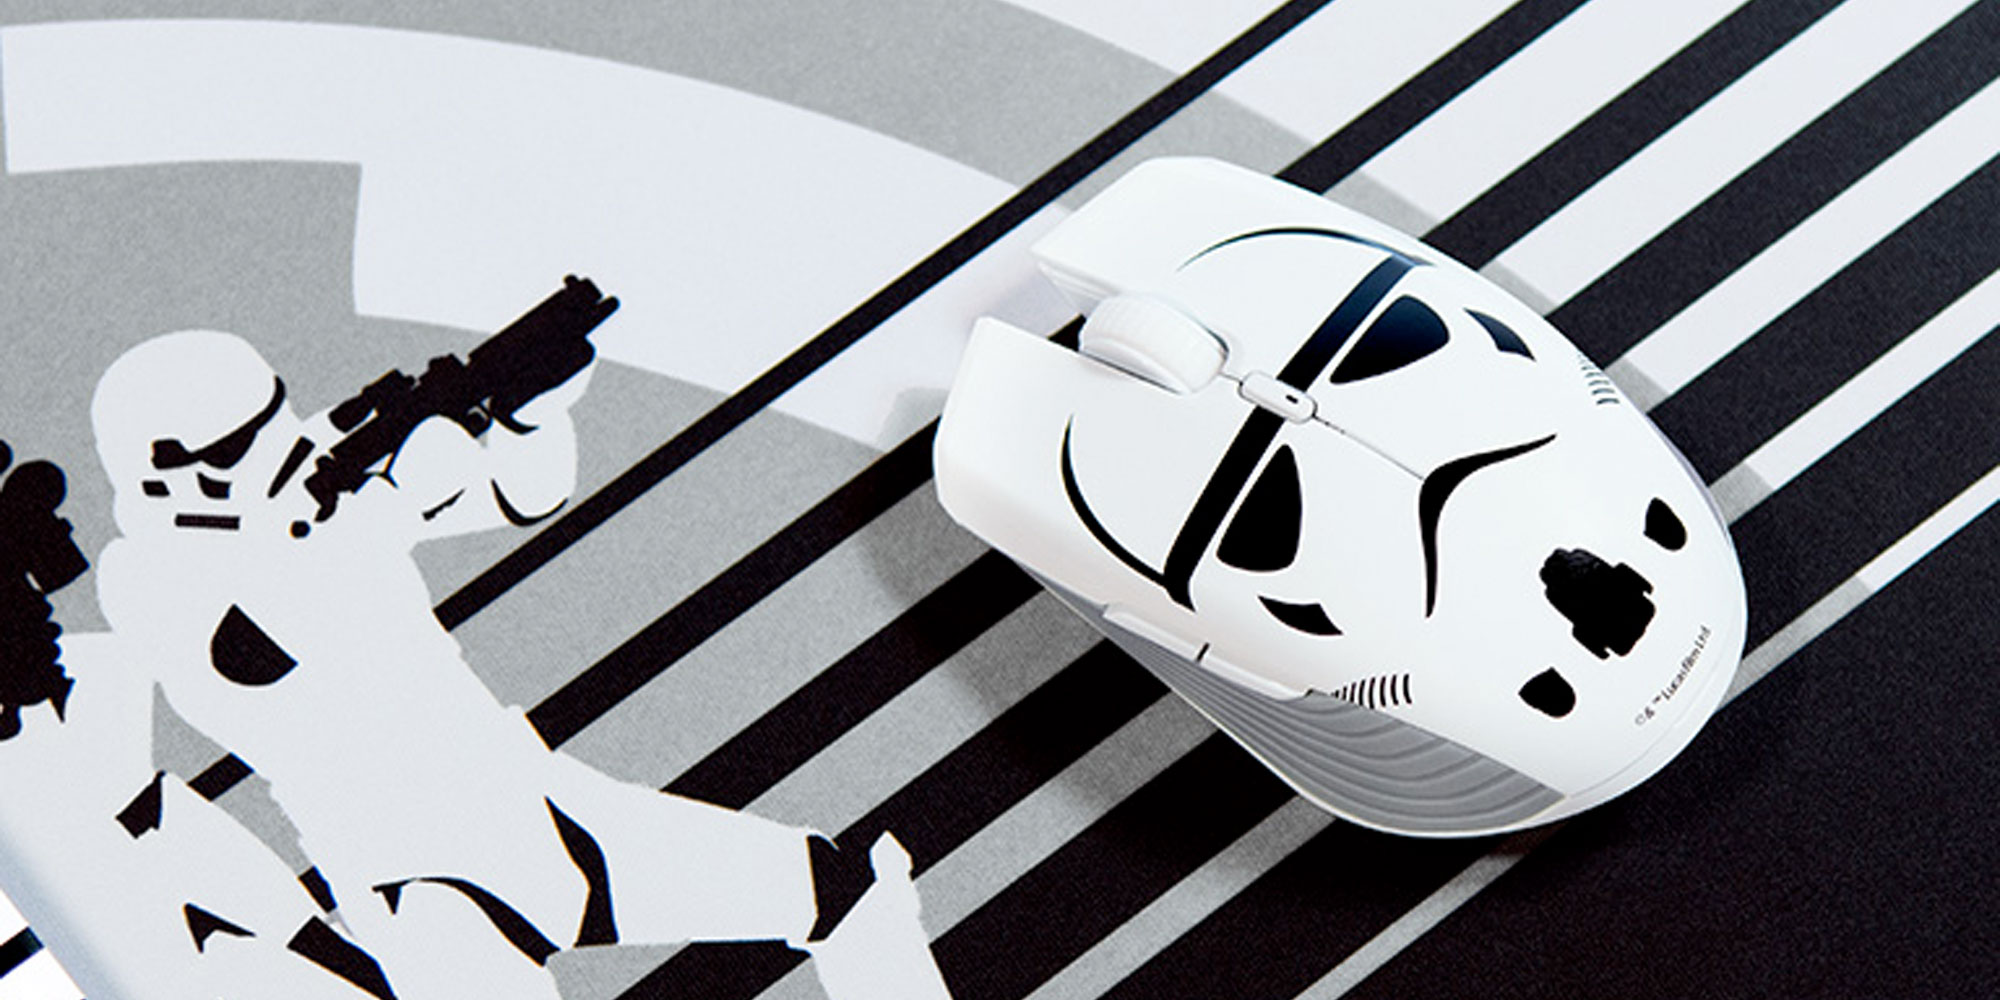 razer stormtrooper edition mouse